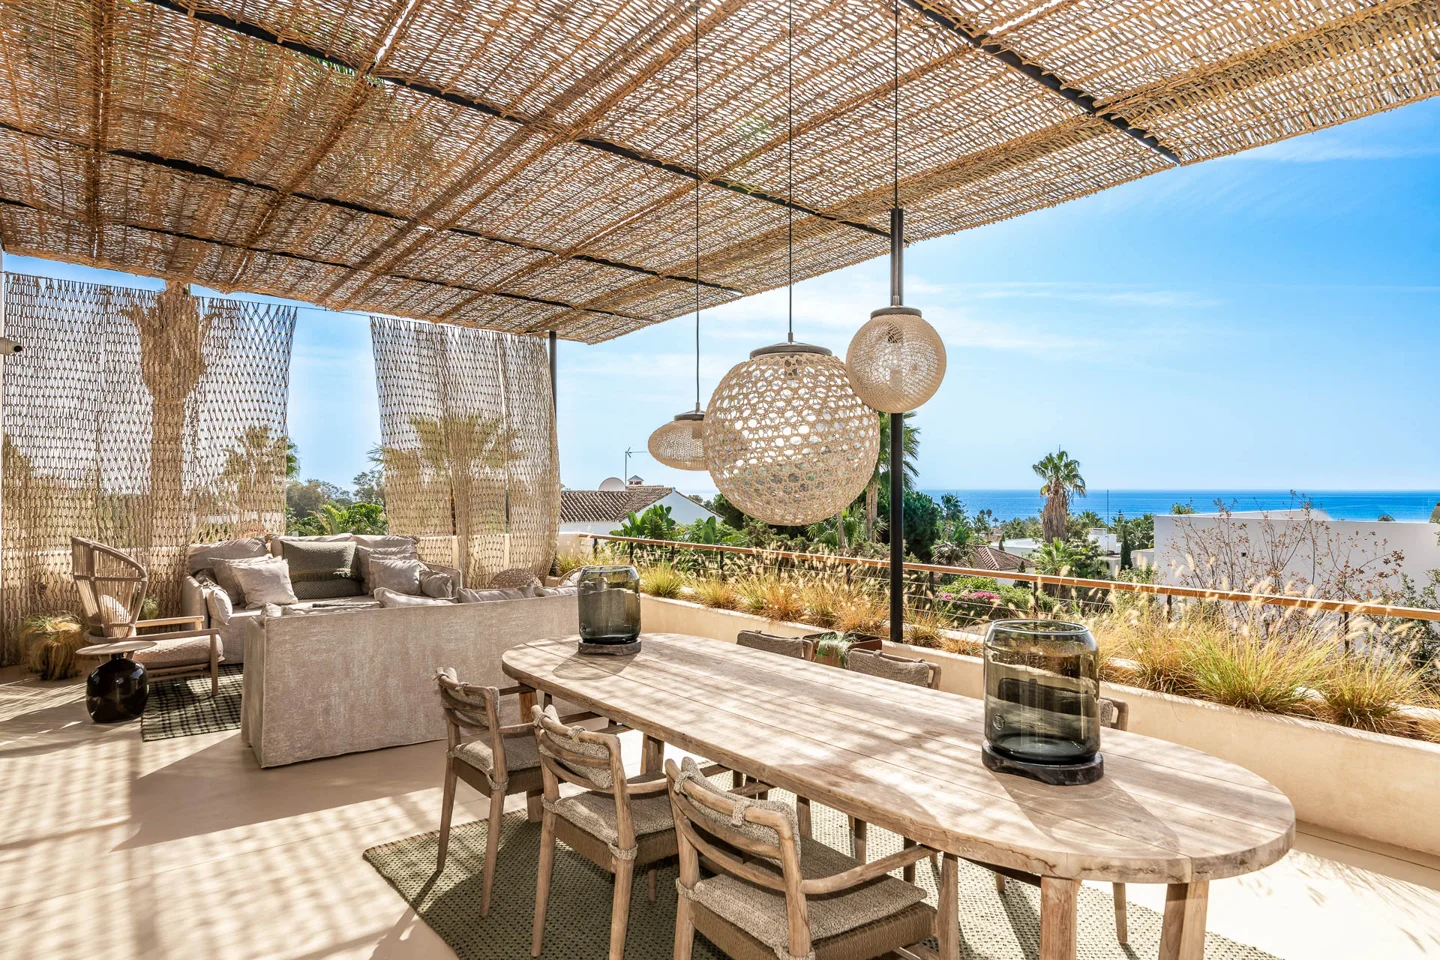 Marbesa: Outstanding Beachside Mediterranean Style Villa in Marbesa